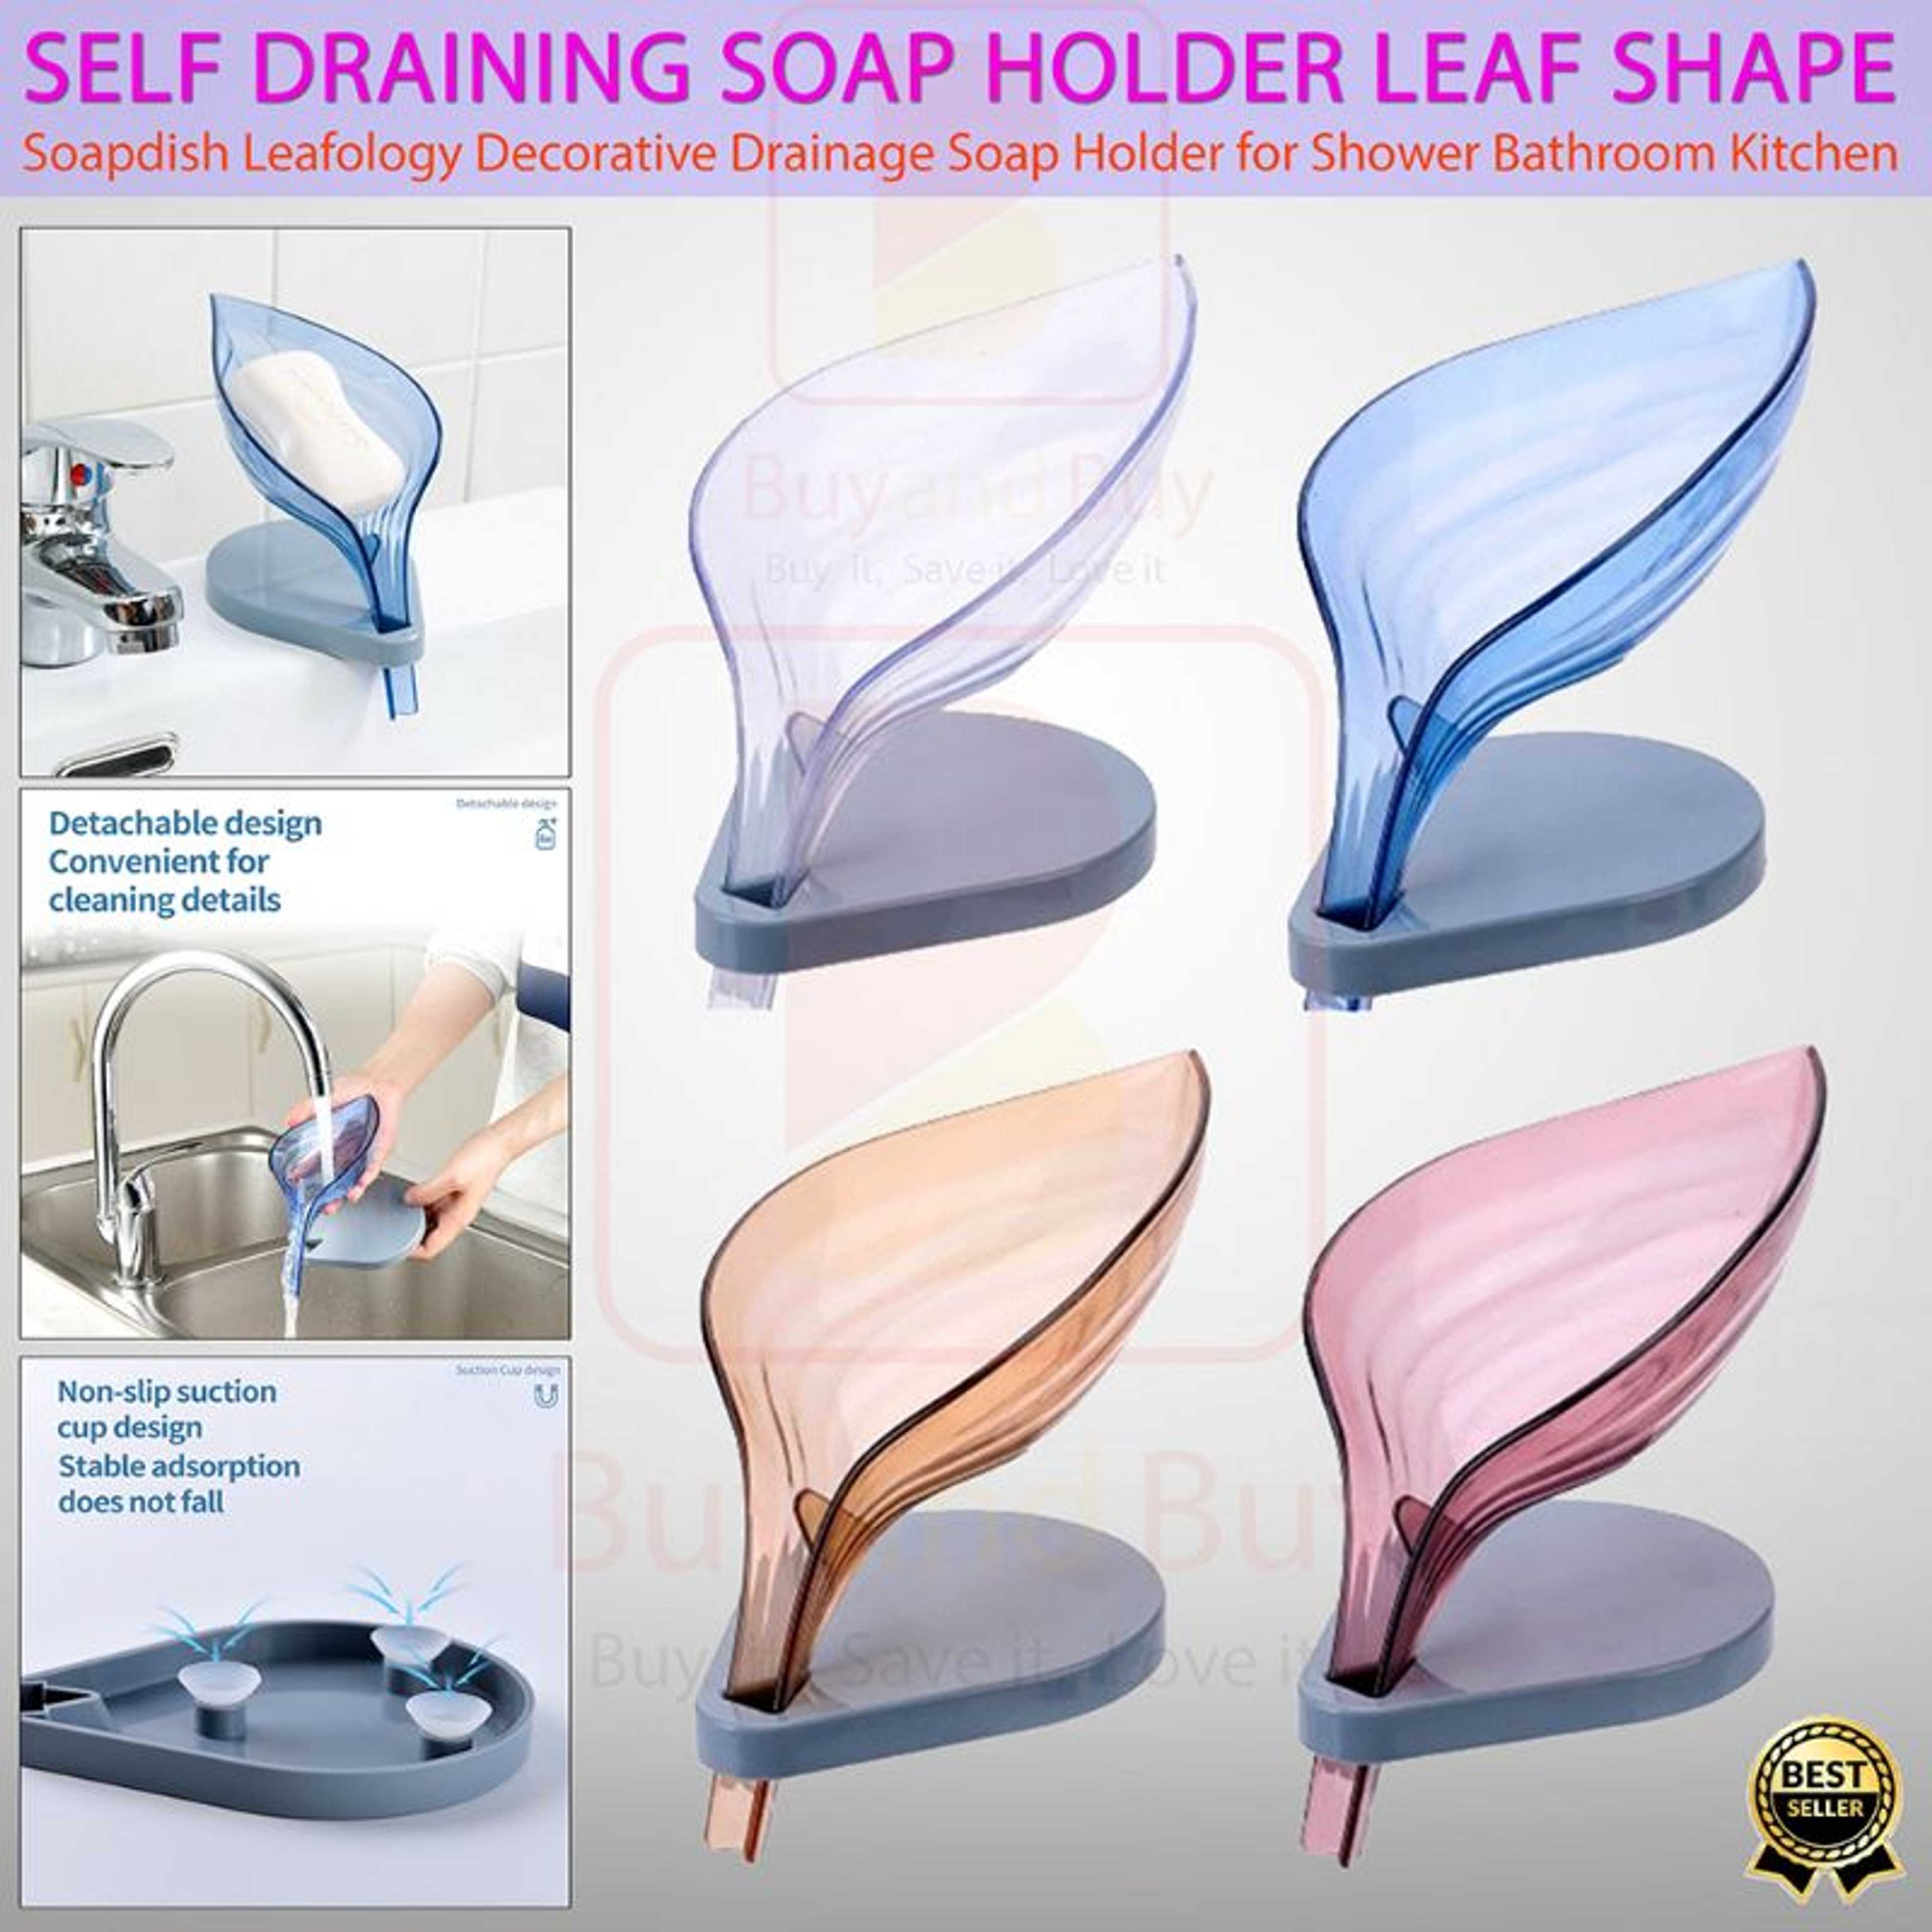 Self Draining Soap Holder Leaf Shape Soapdish Leafology Decorative Drainage Soap Holder for Shower Bathroom Kitchen